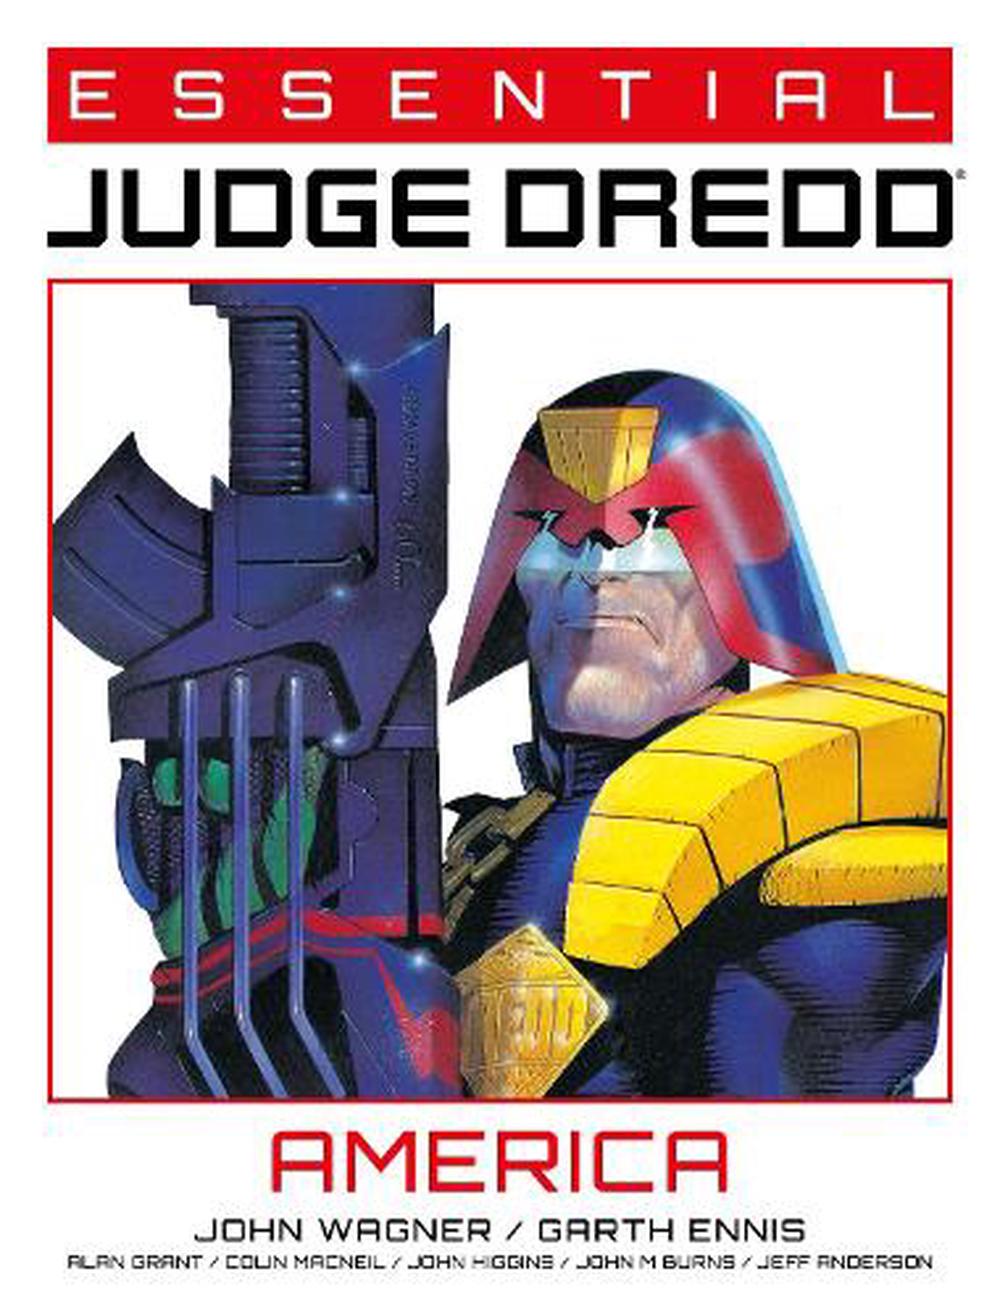 Batman/Judge Dredd by John Wagner